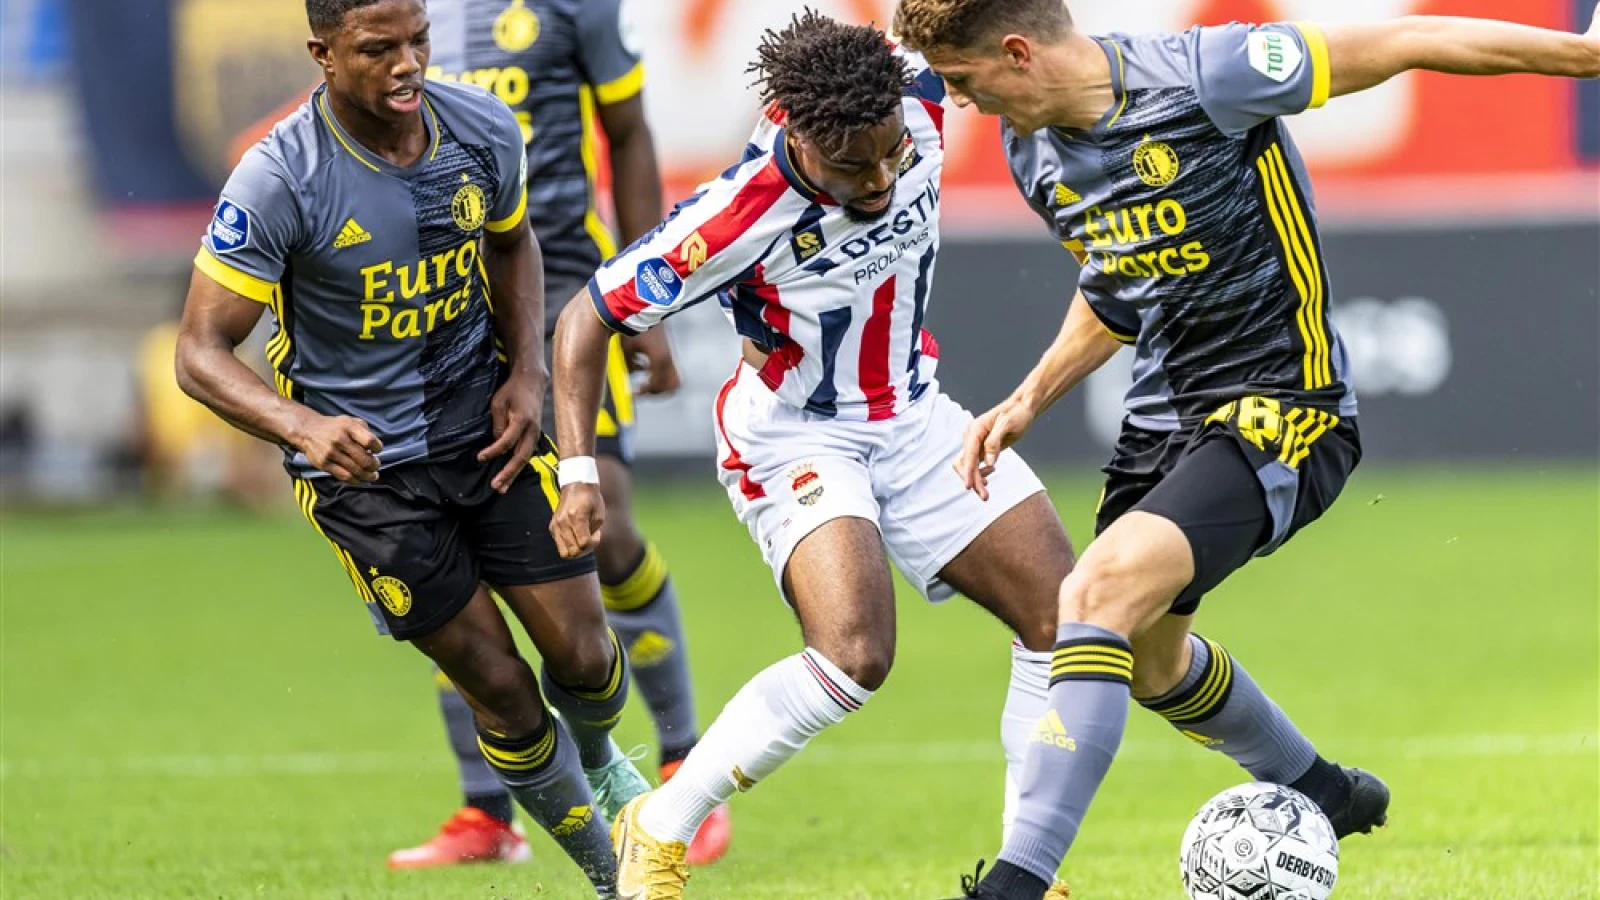 LIVE | Willem II - Feyenoord 0-4 | Einde wedstrijd